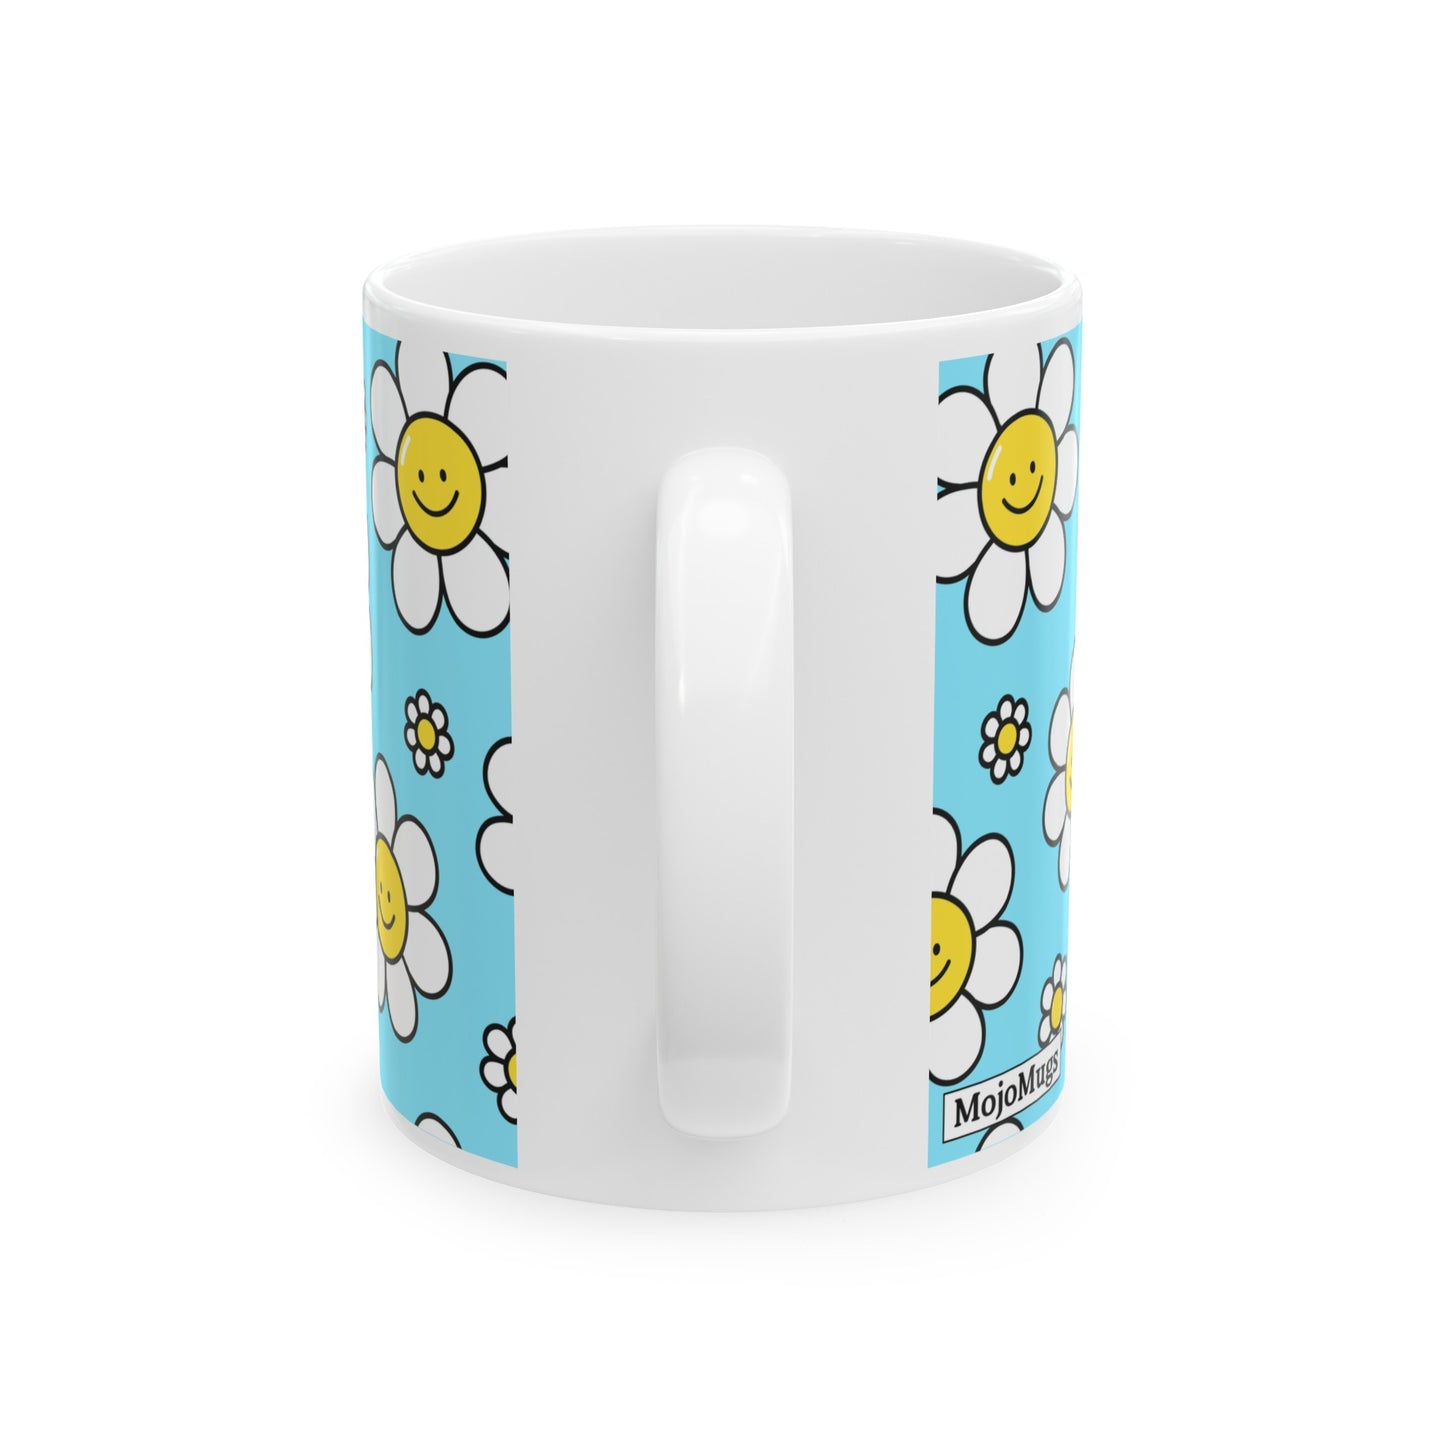 Smiling Daisies - 11oz mug